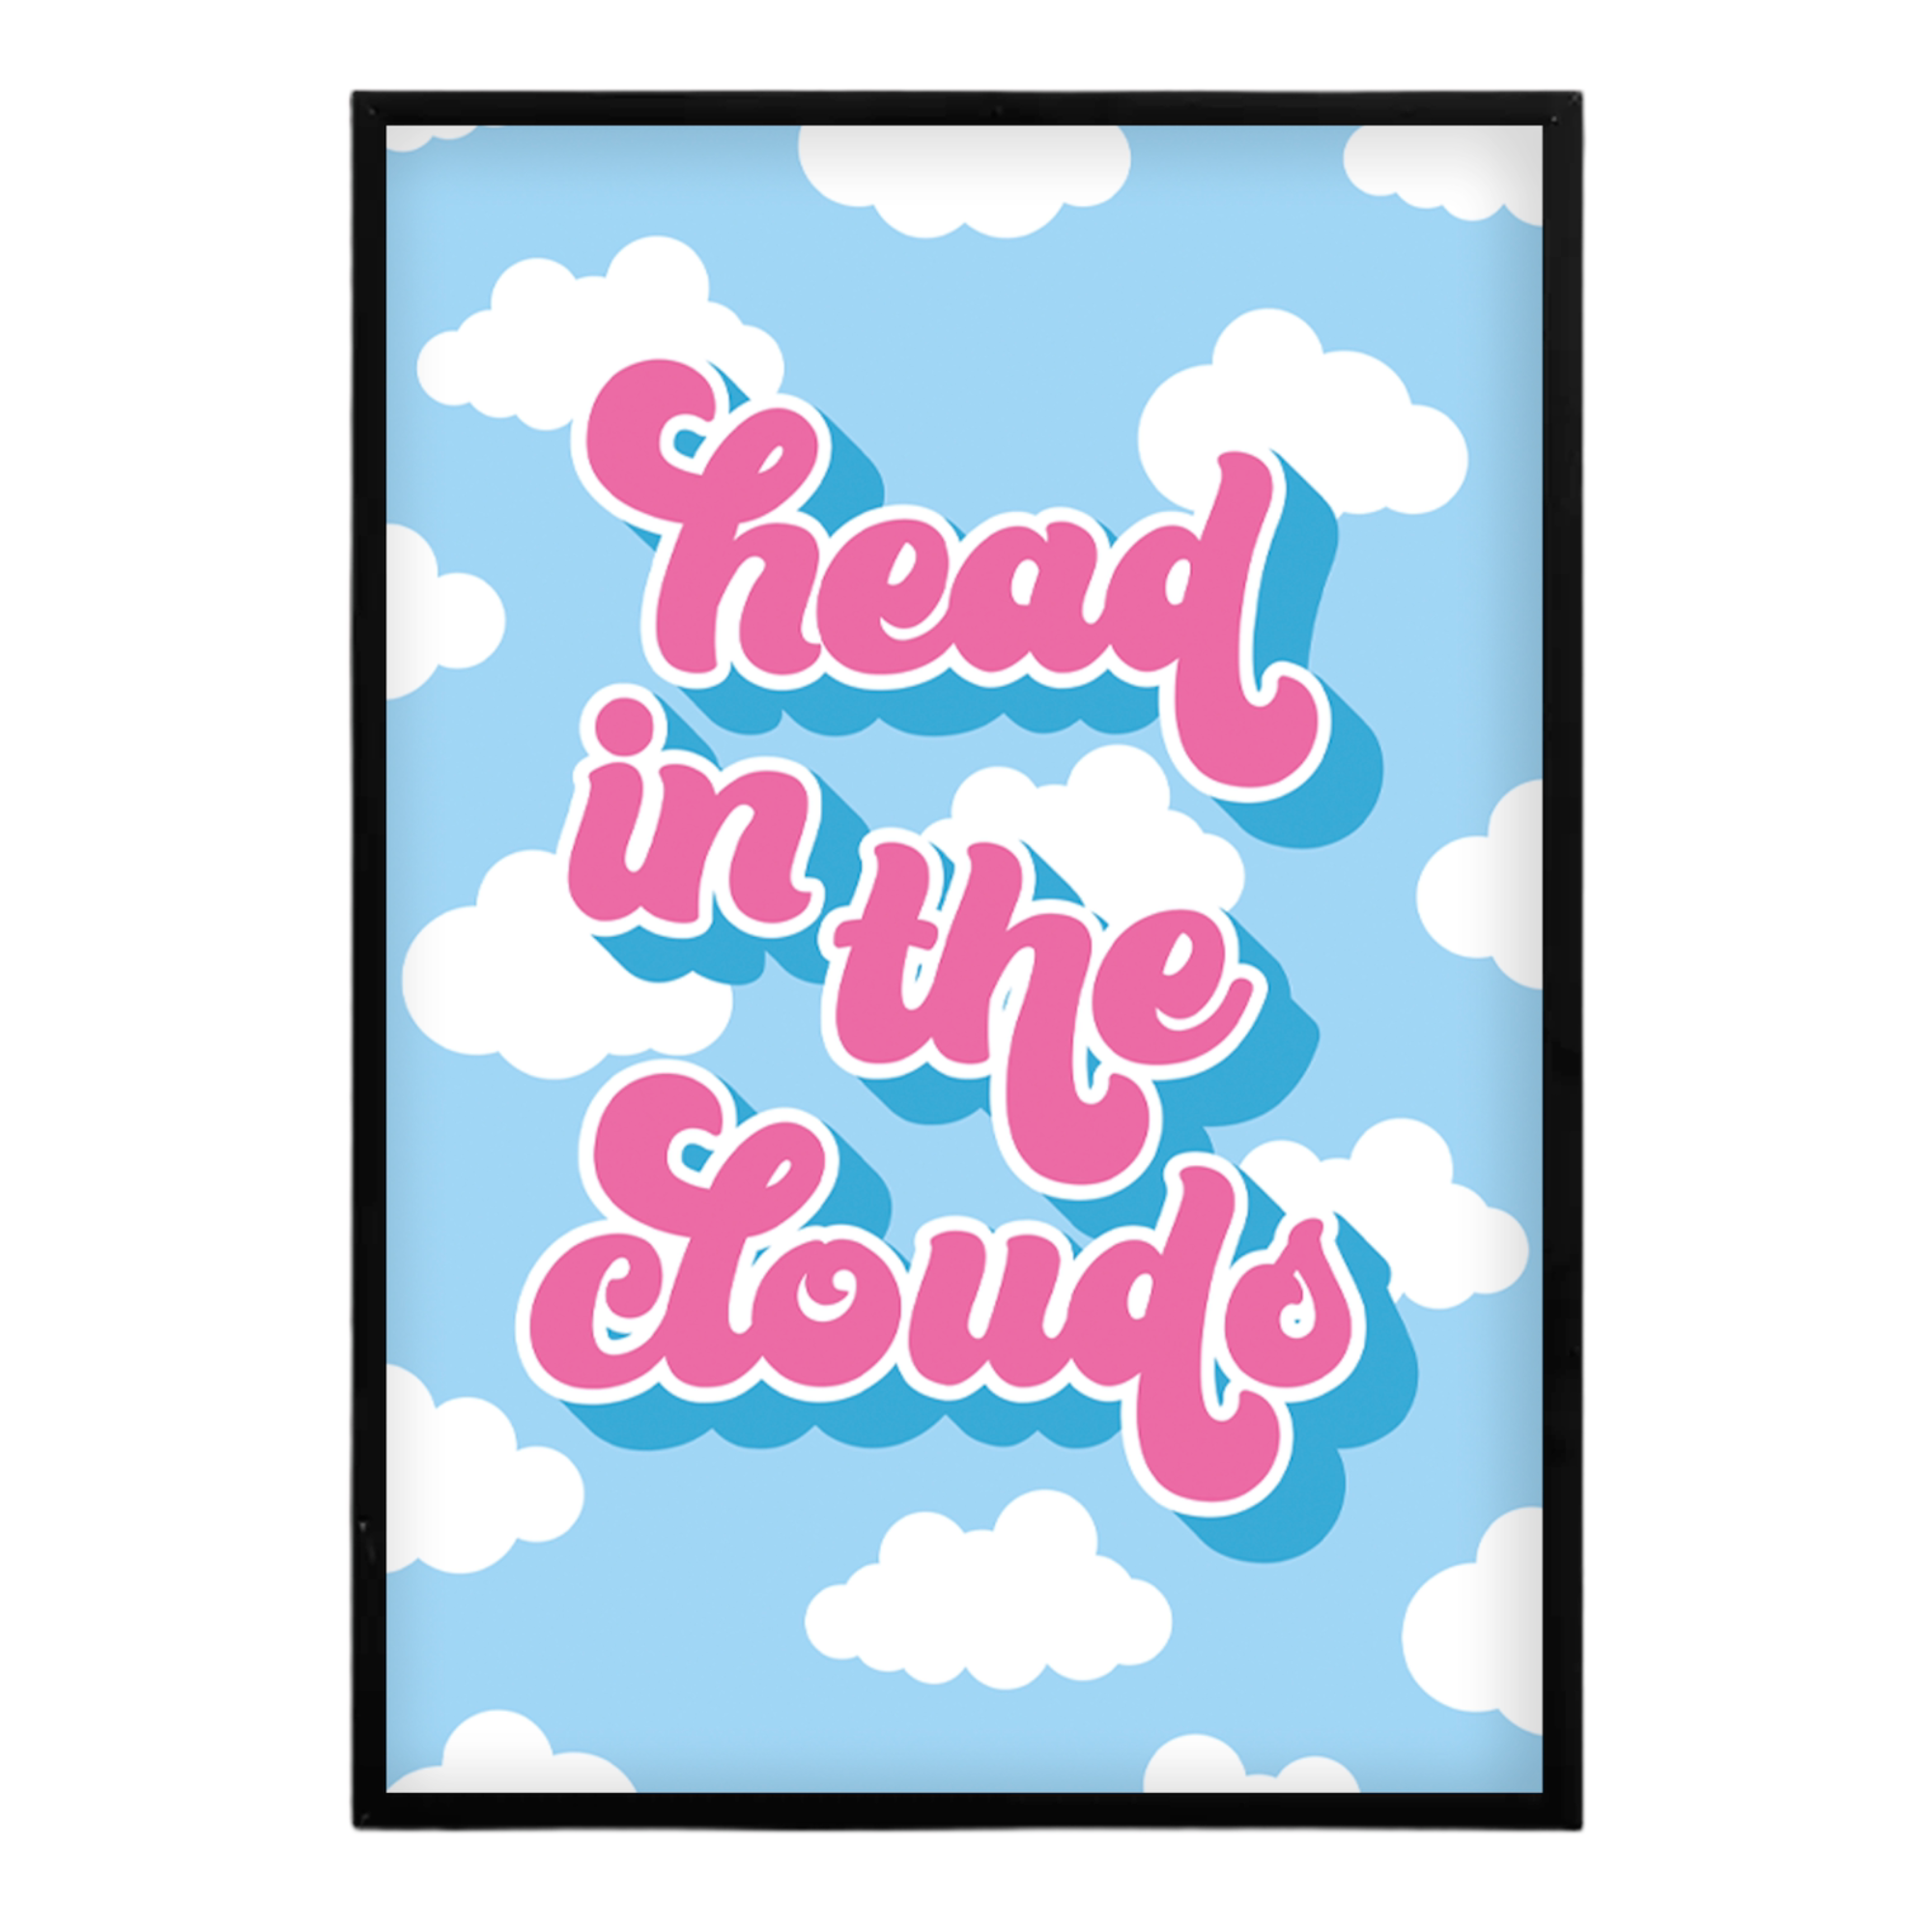 head in the clouds Print